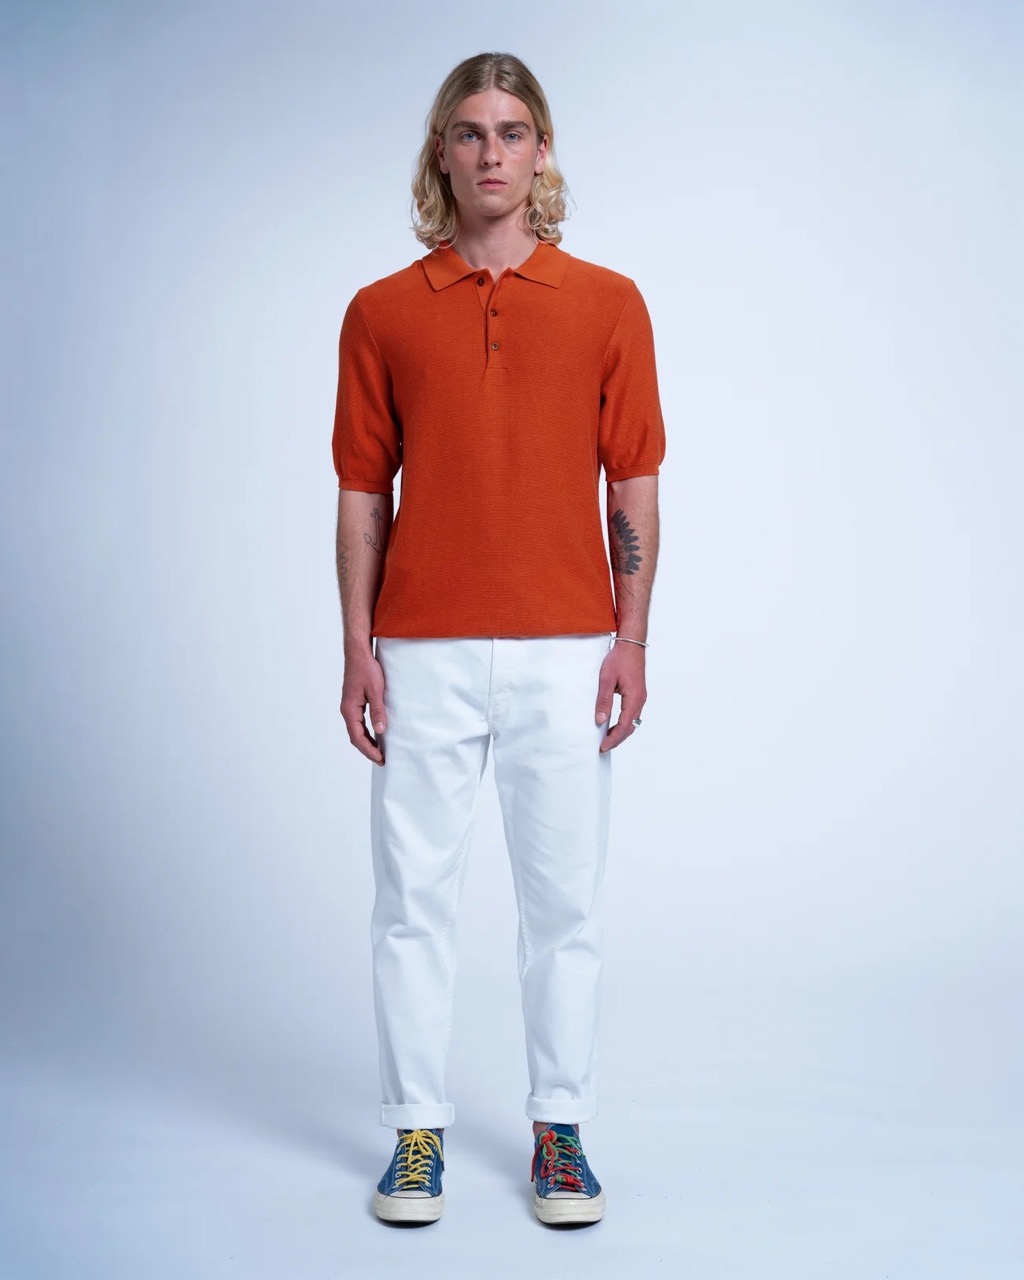 Polo tricoté Italo orange Homecore